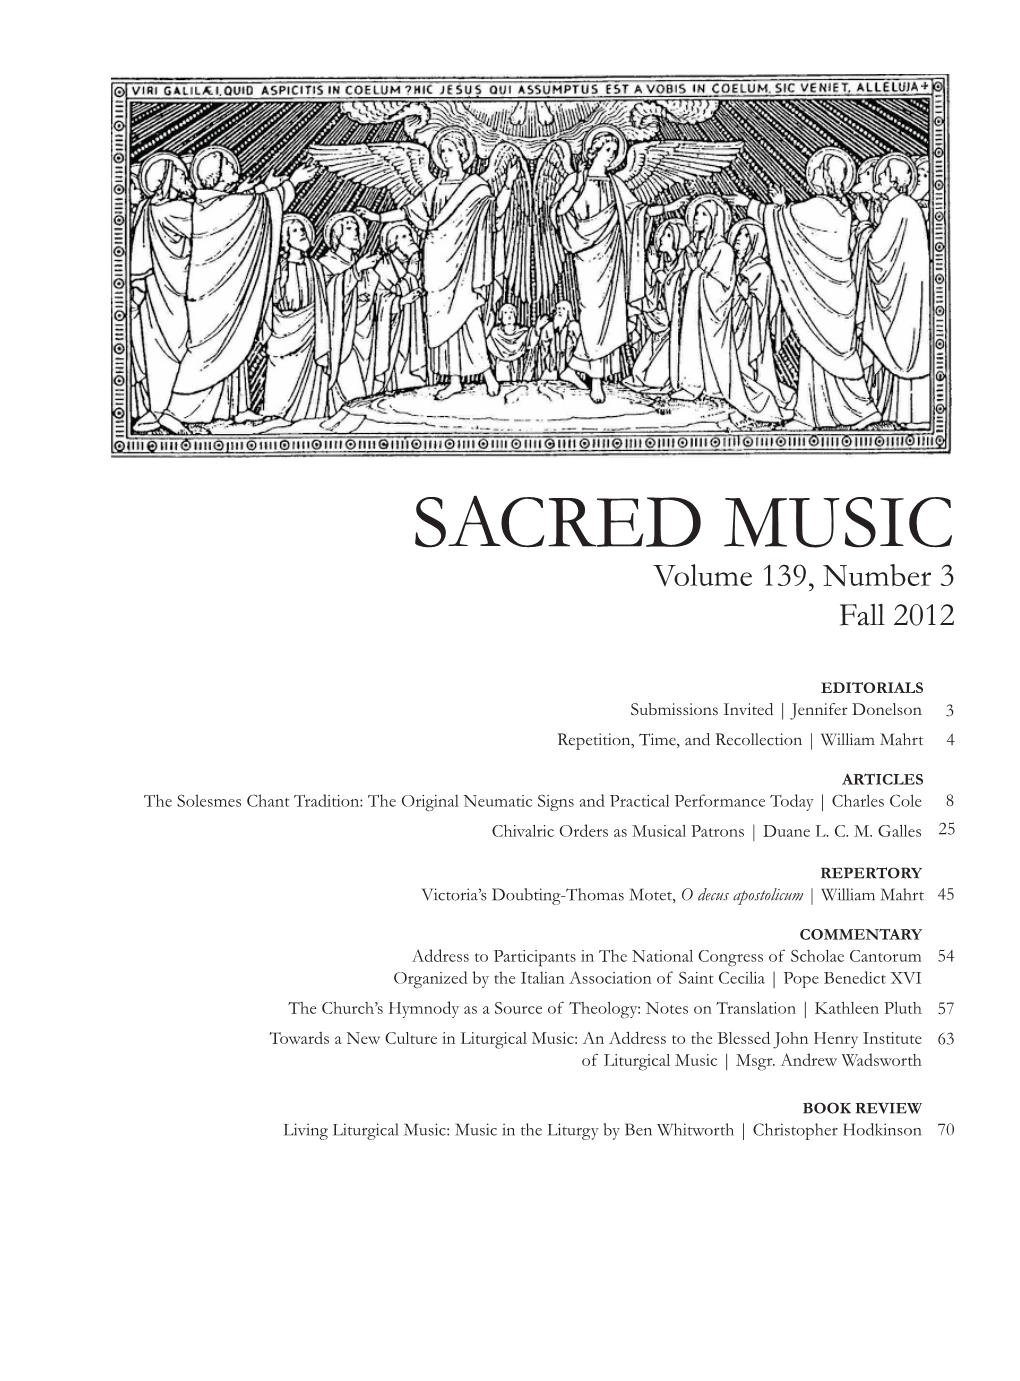 SACRED MUSIC Volume 139, Number 3 Fall 2012